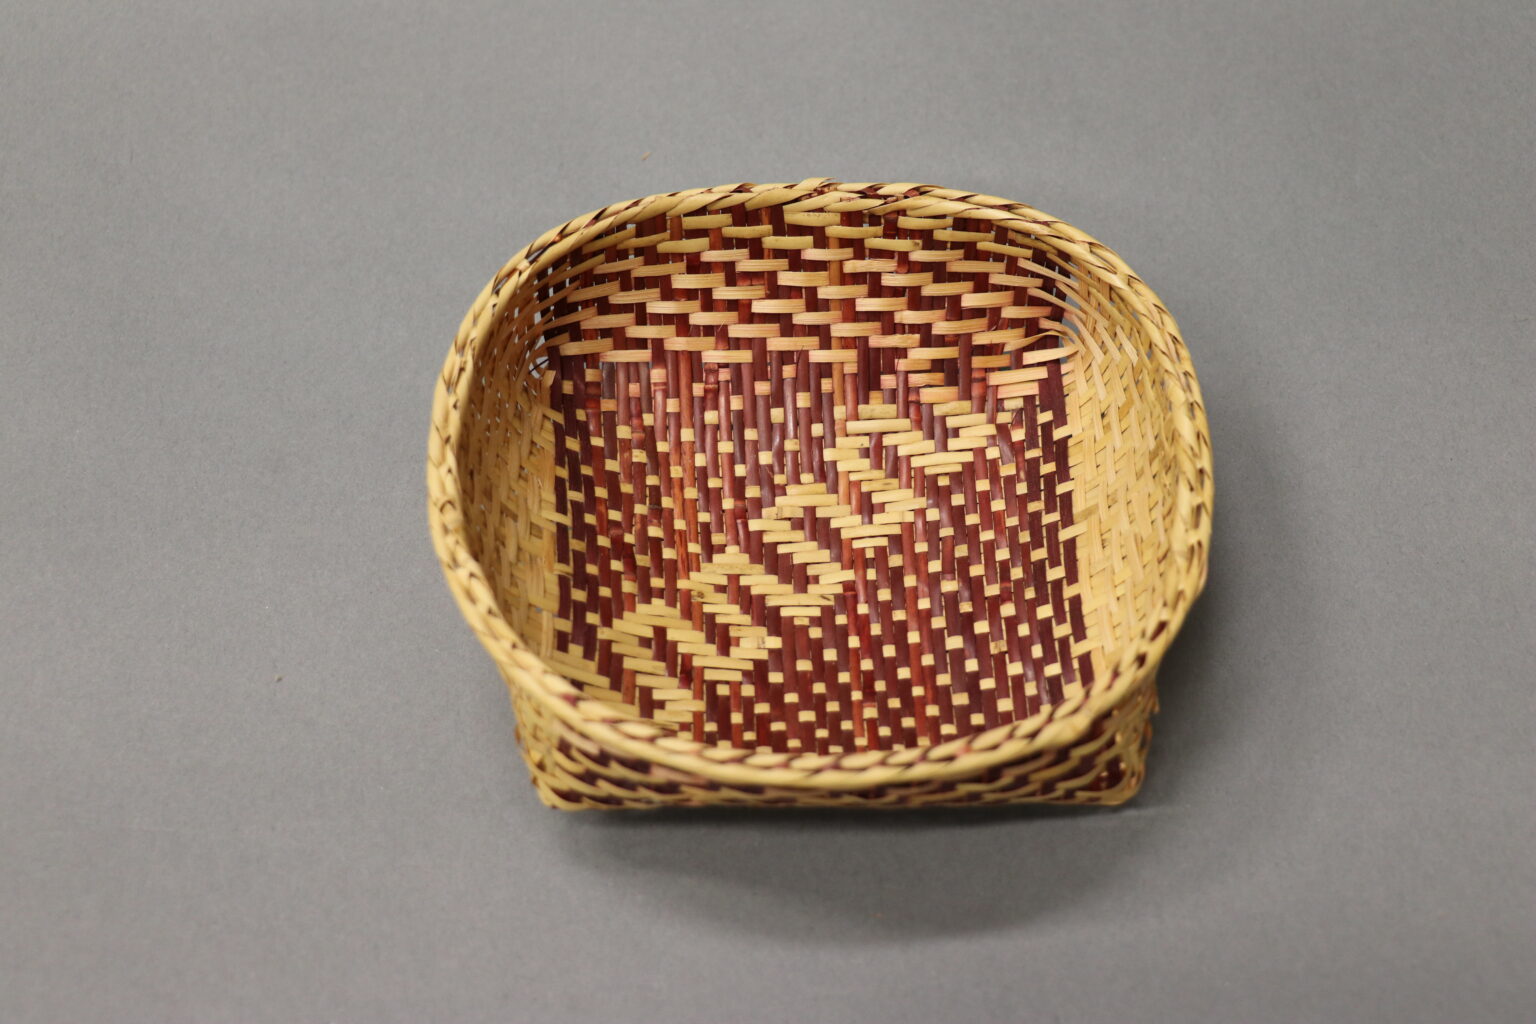 Lorena Langley. Plaited Alimpá (fanner basket) with Worm Tracks on Pine Bark design, 2005. Rivercane (Arundinaria gigantea), iɫaní